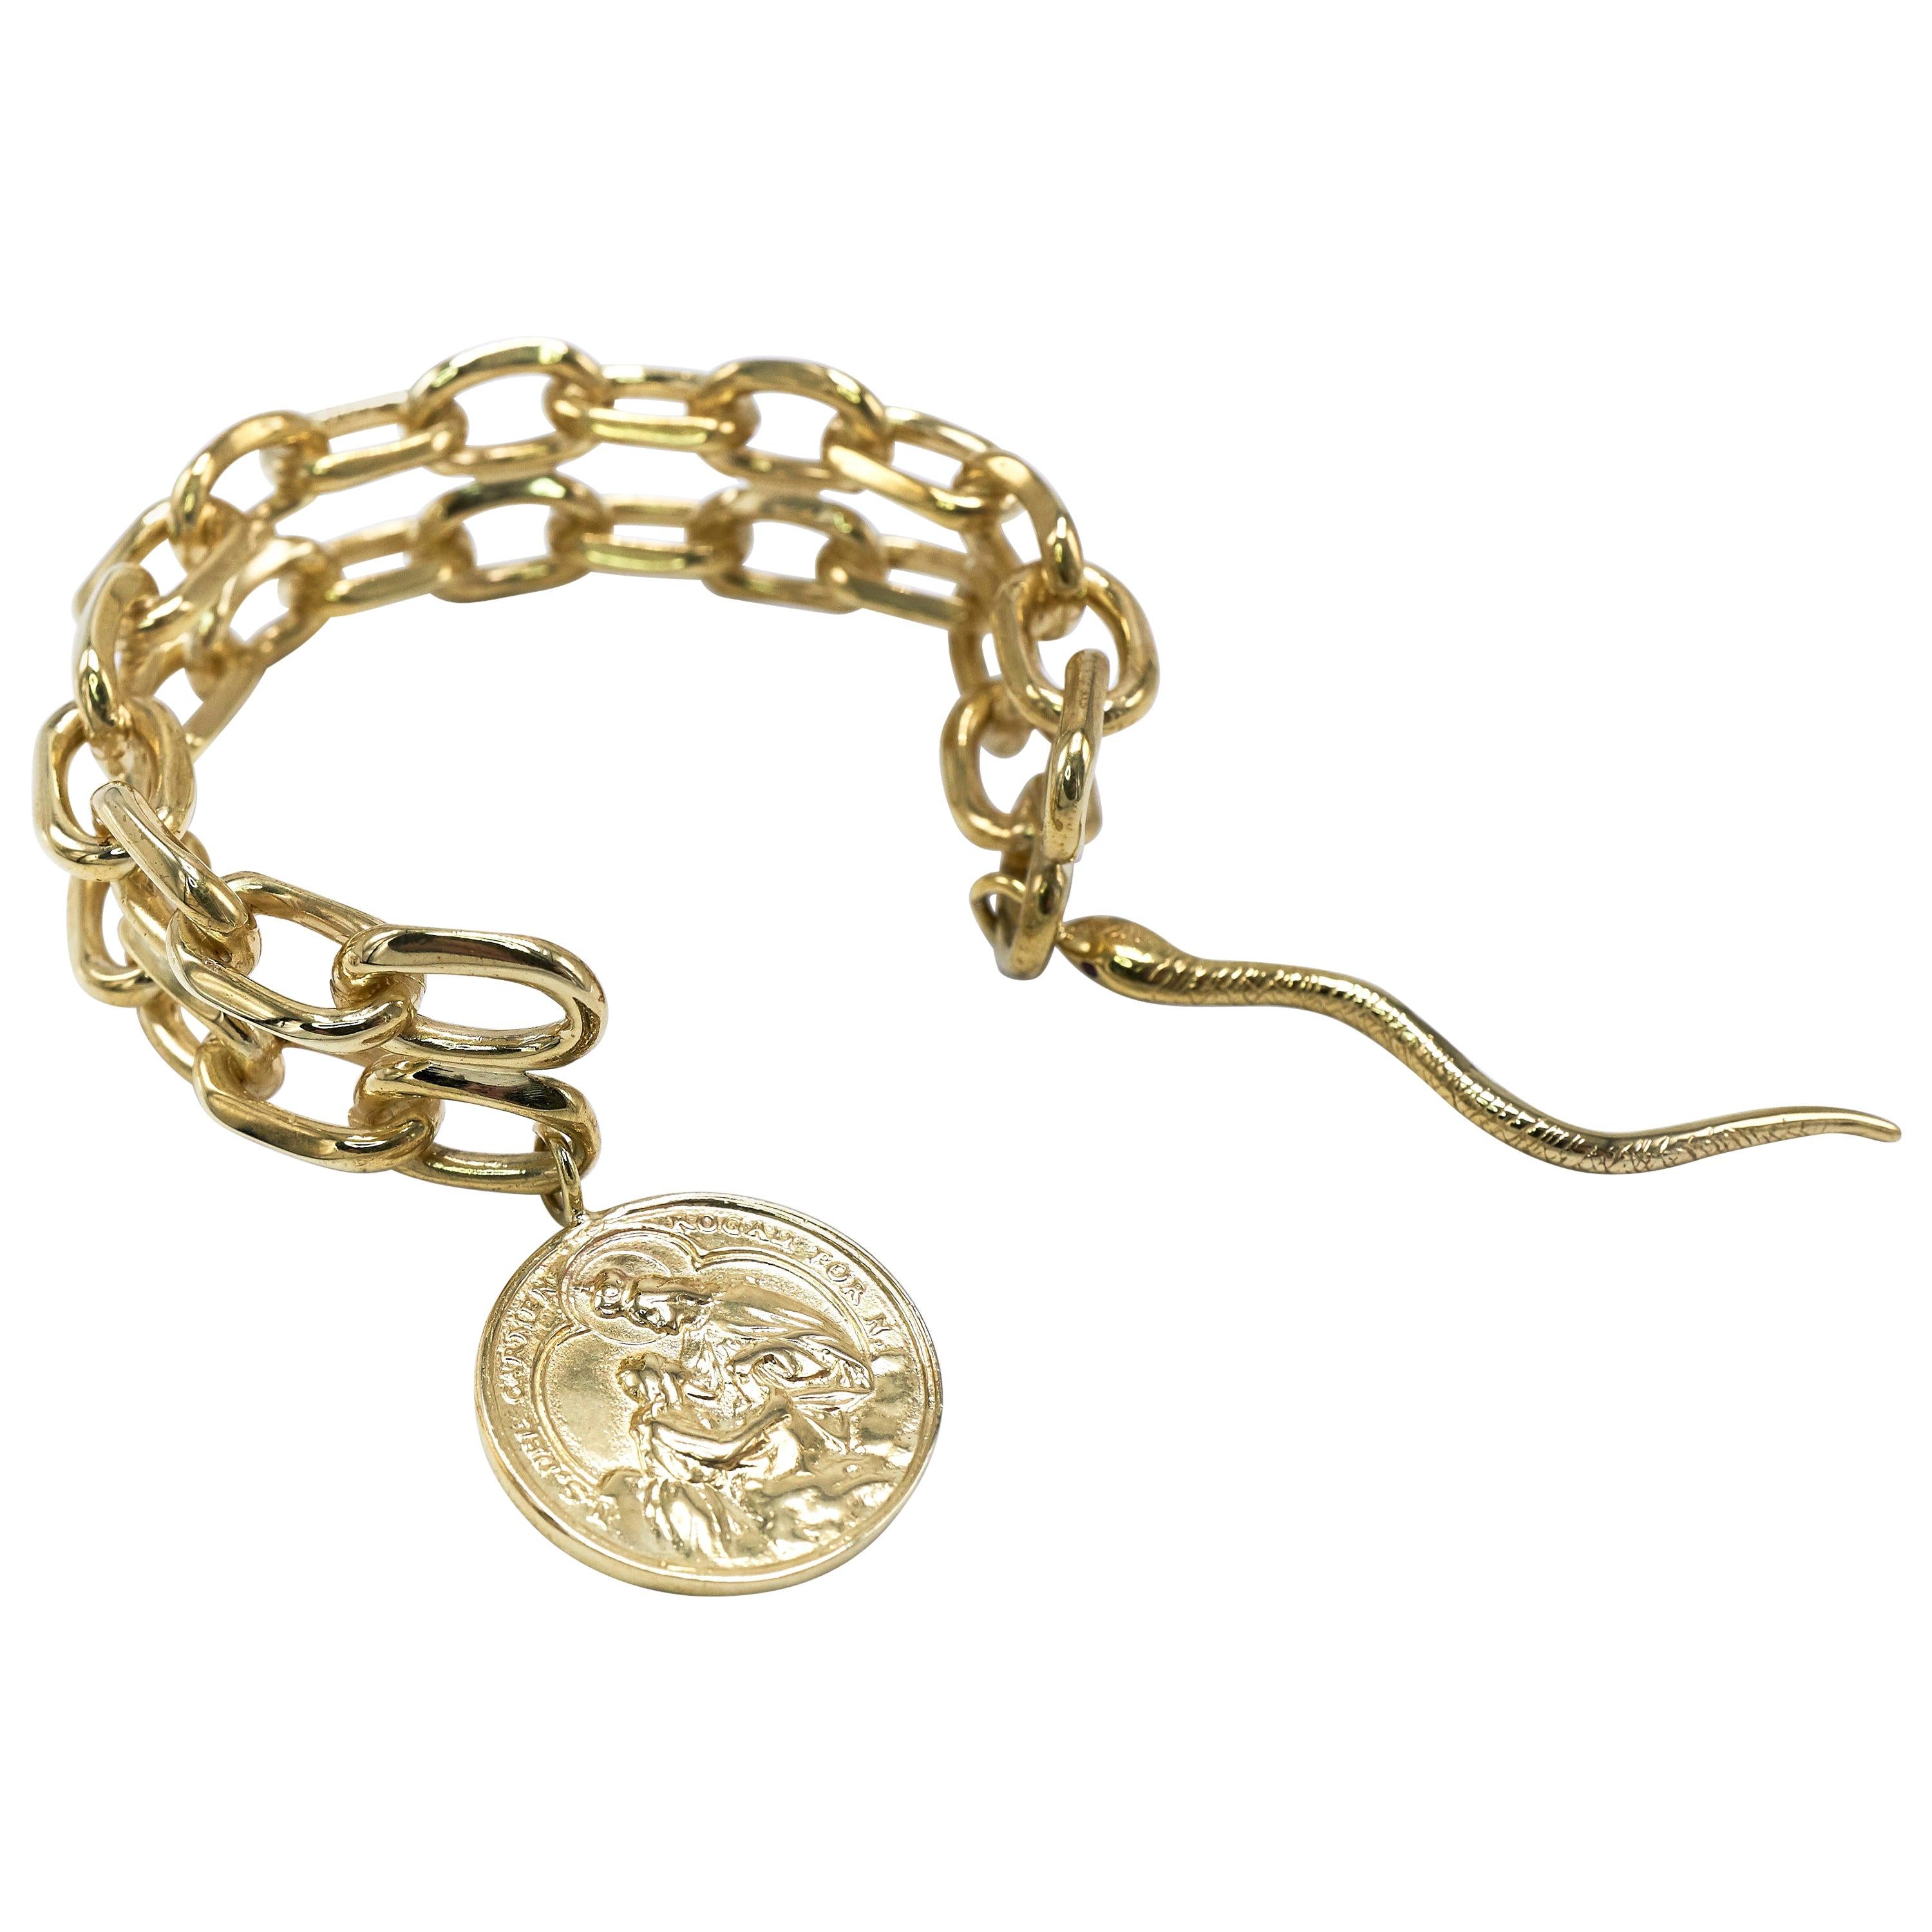 Statement Chunky Chain Cuff Bangle Bracelet Virgin Mary Medal J Dauphin

J DAUPHIN 